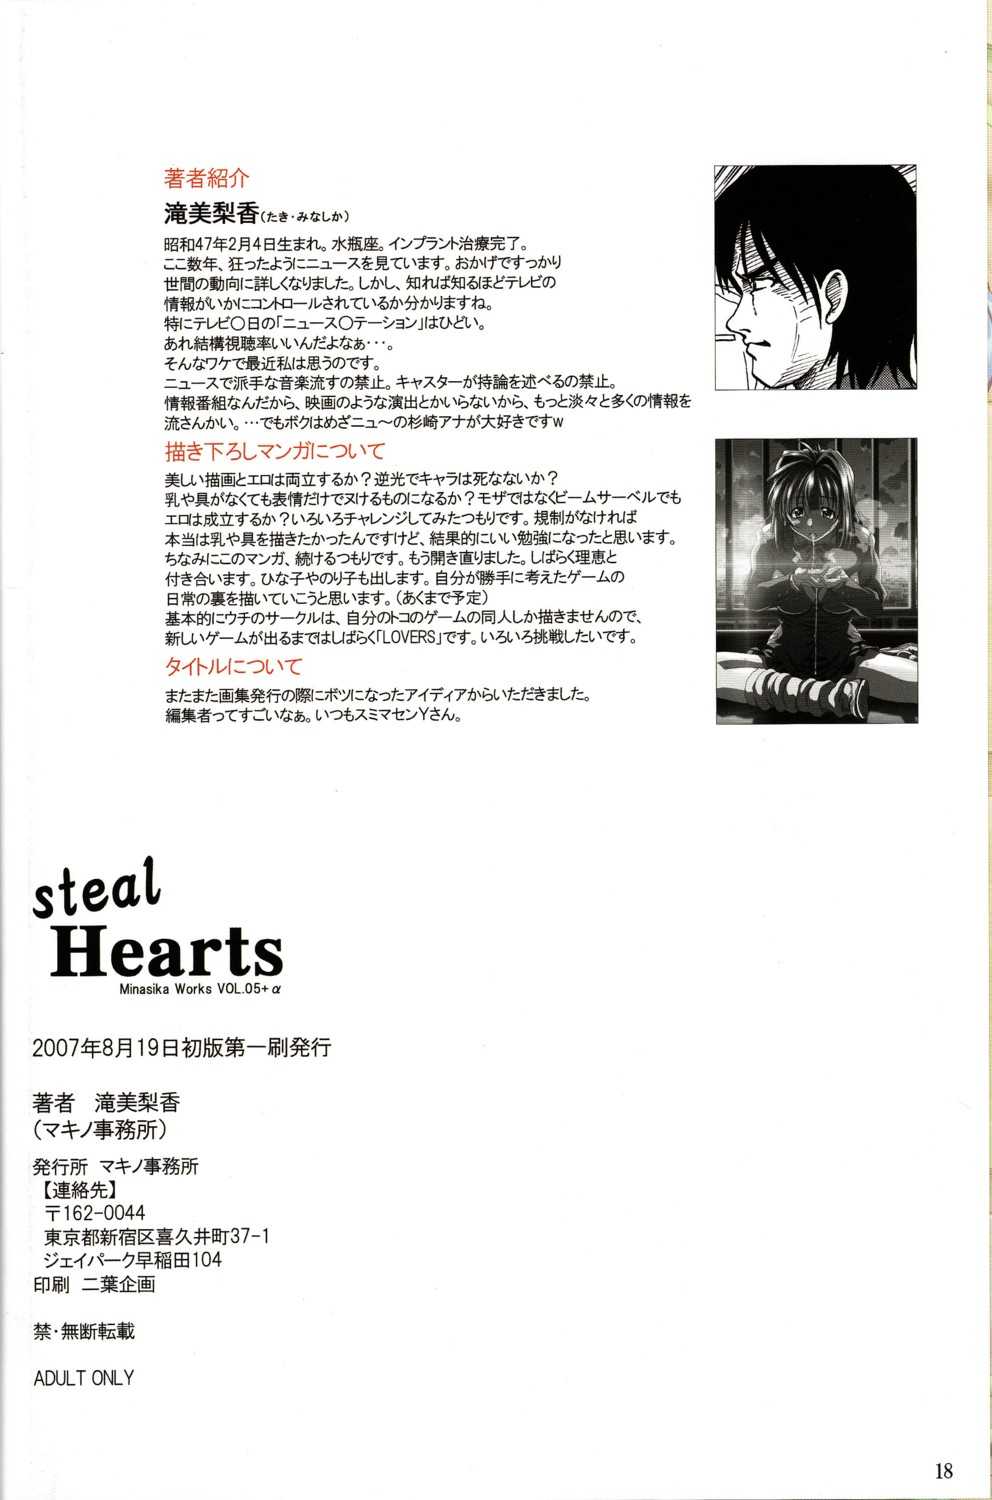 [Makino Jimusho] Steal Hearts Minasika Works VOL.05 {masterbloodfer} 